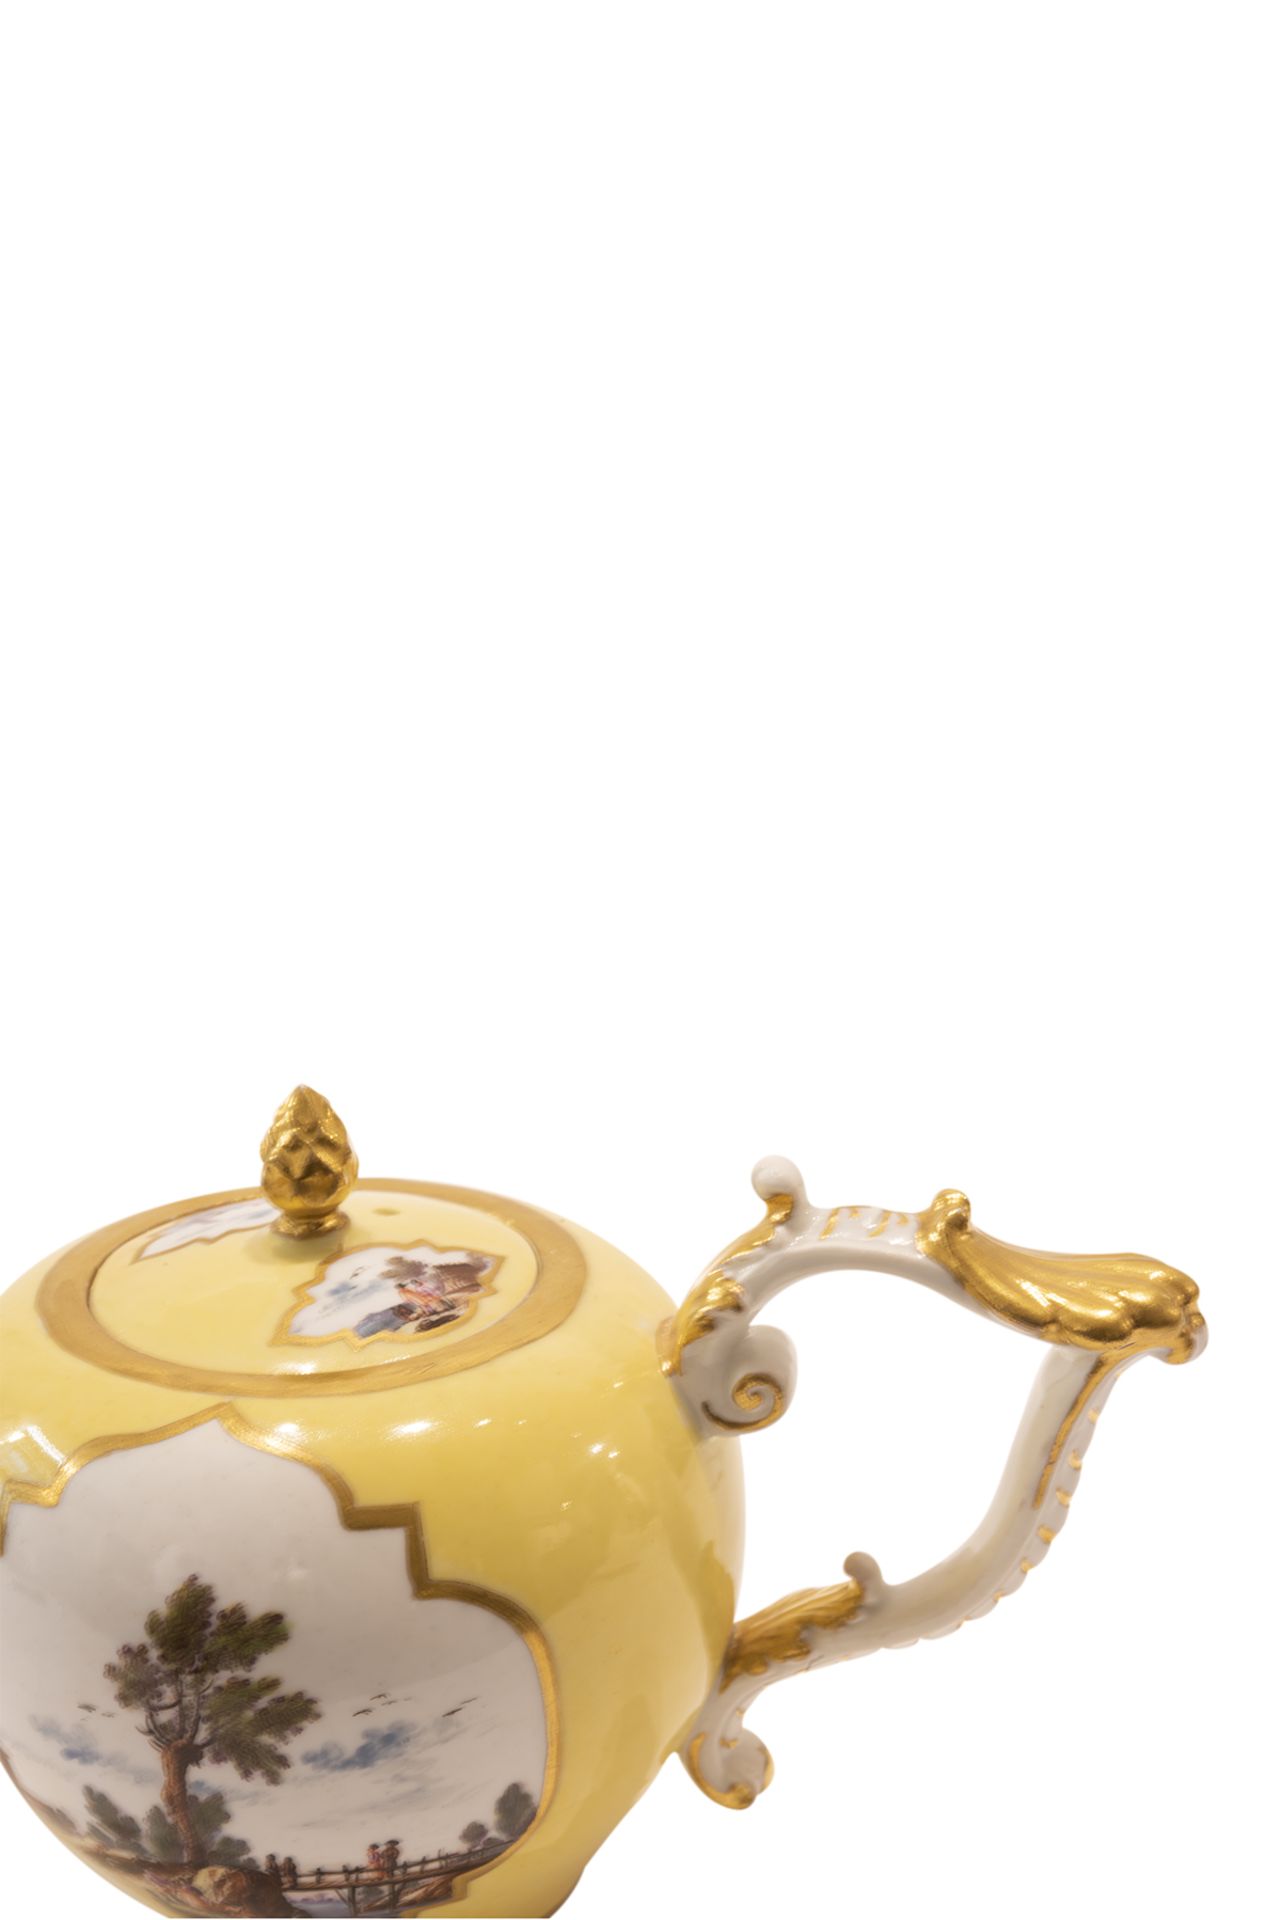 Teapot lemon yellow stock, Meissen 1740 - Image 6 of 6